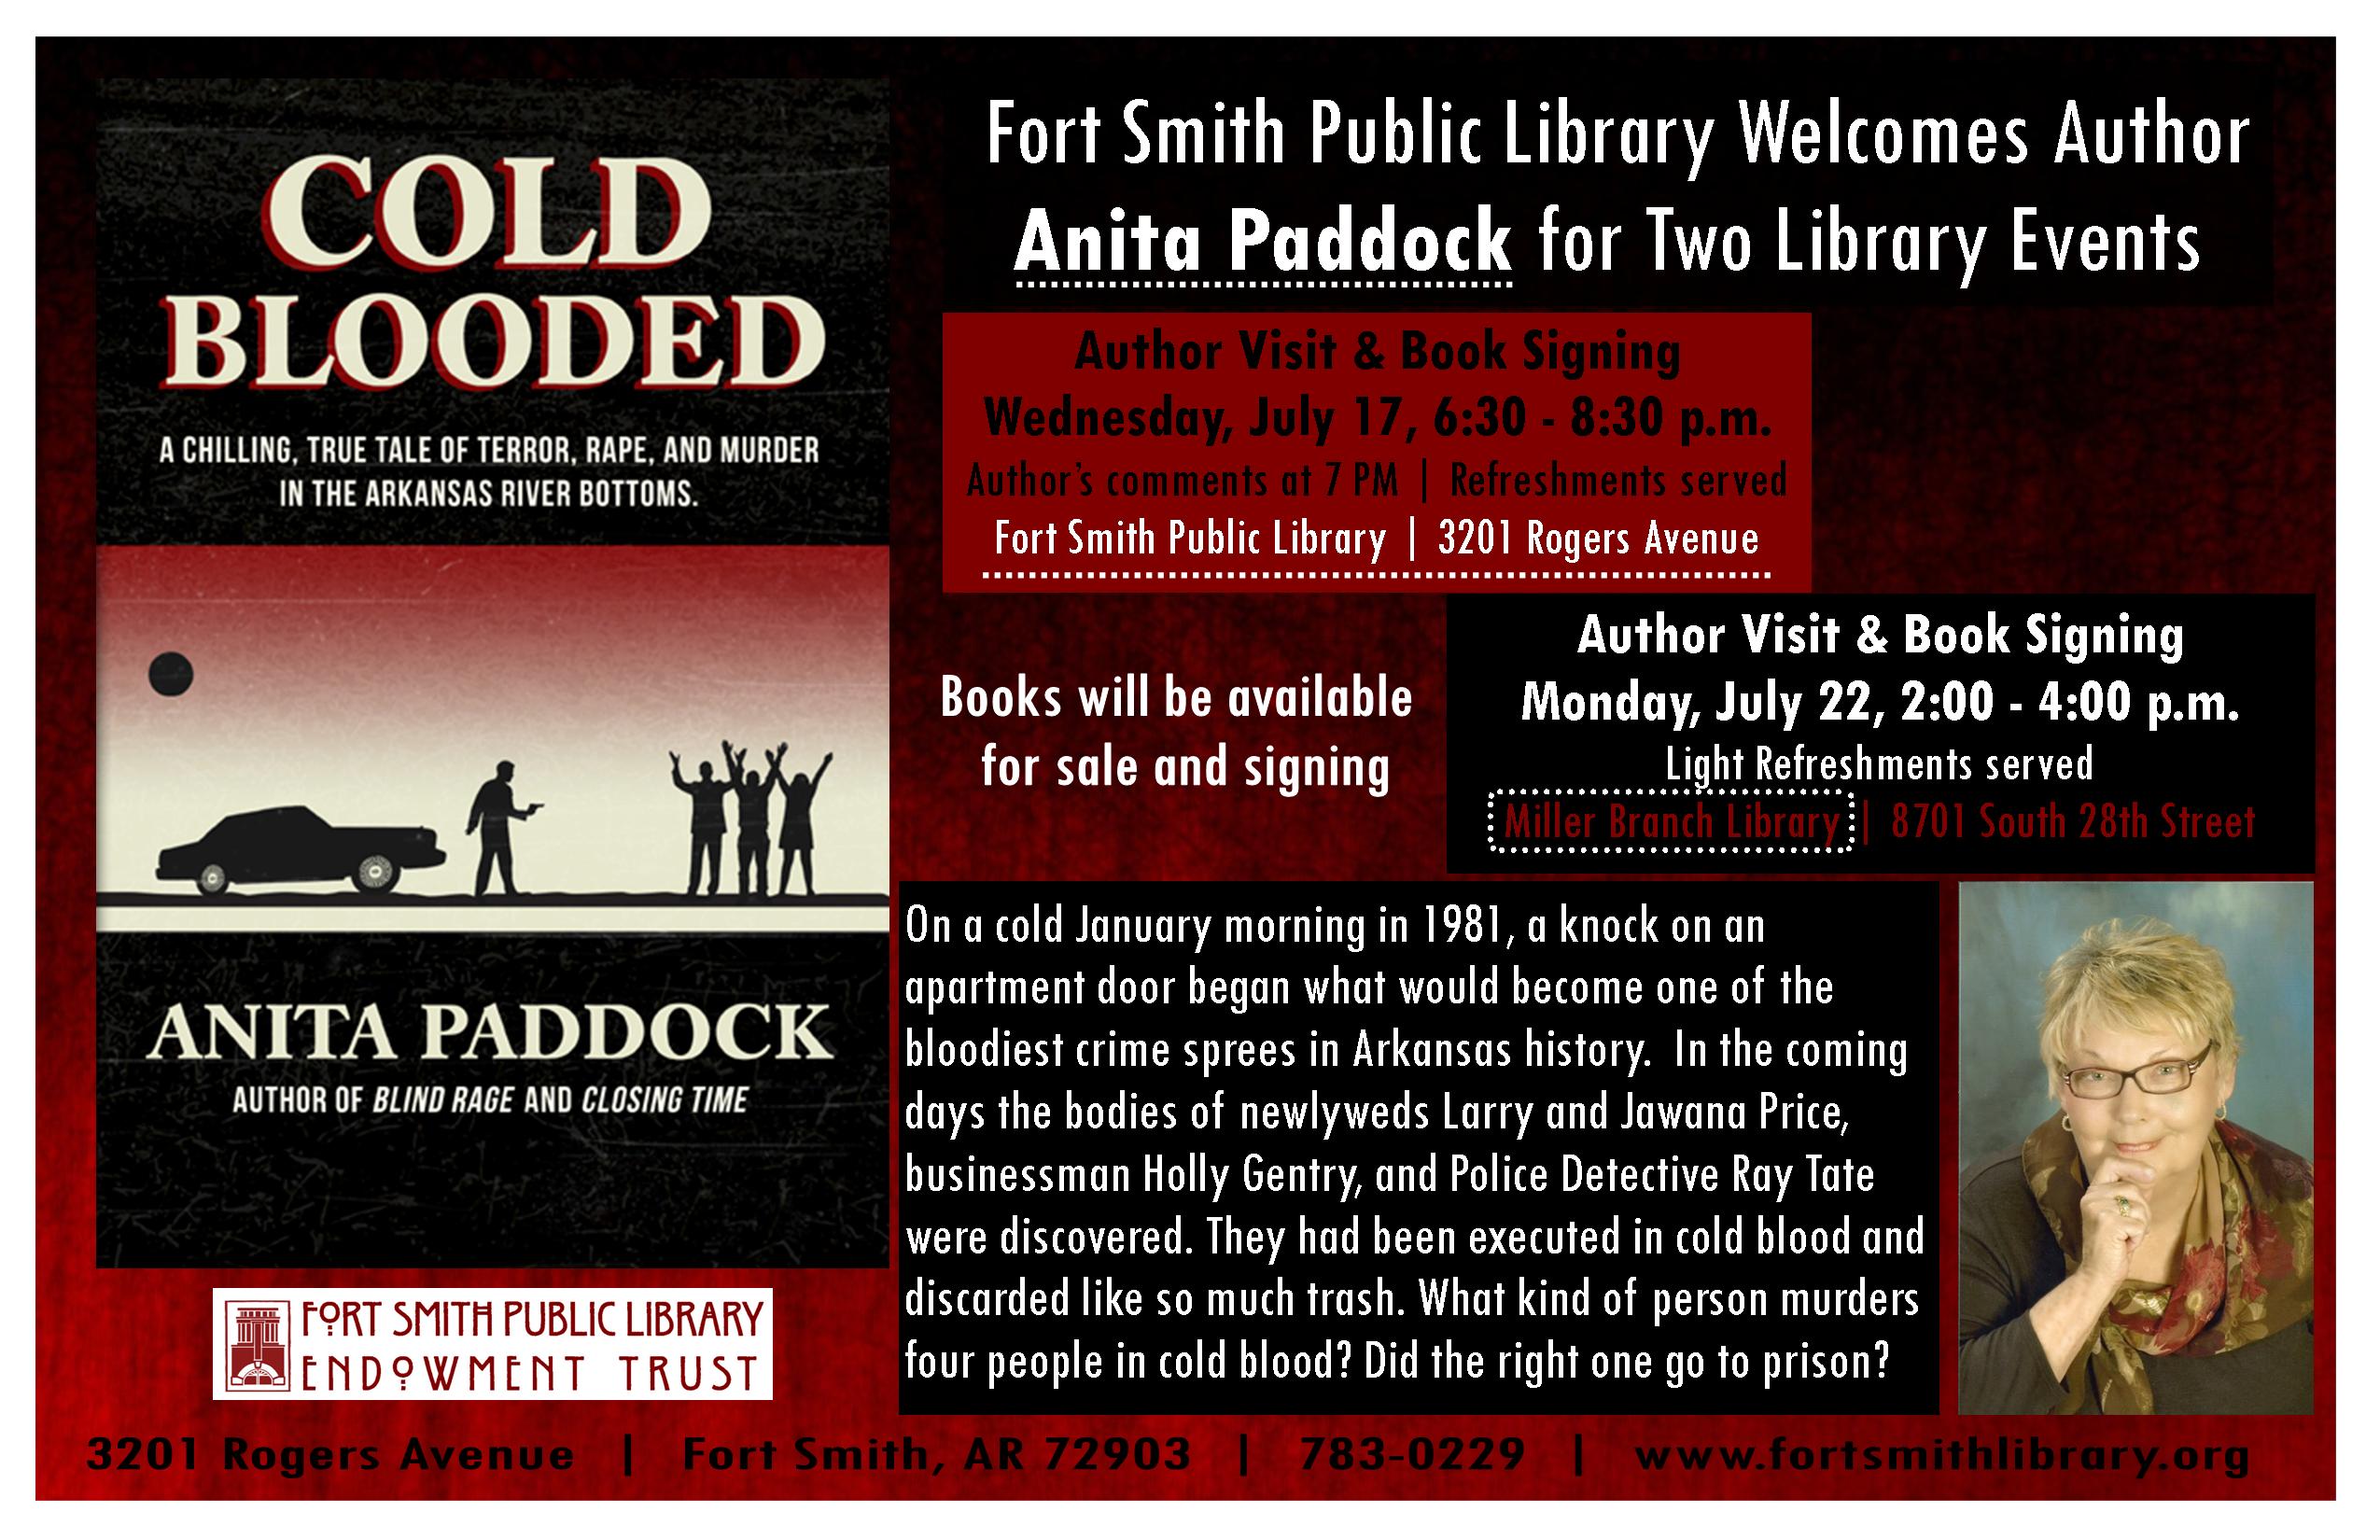 Anita Paddock author events poster